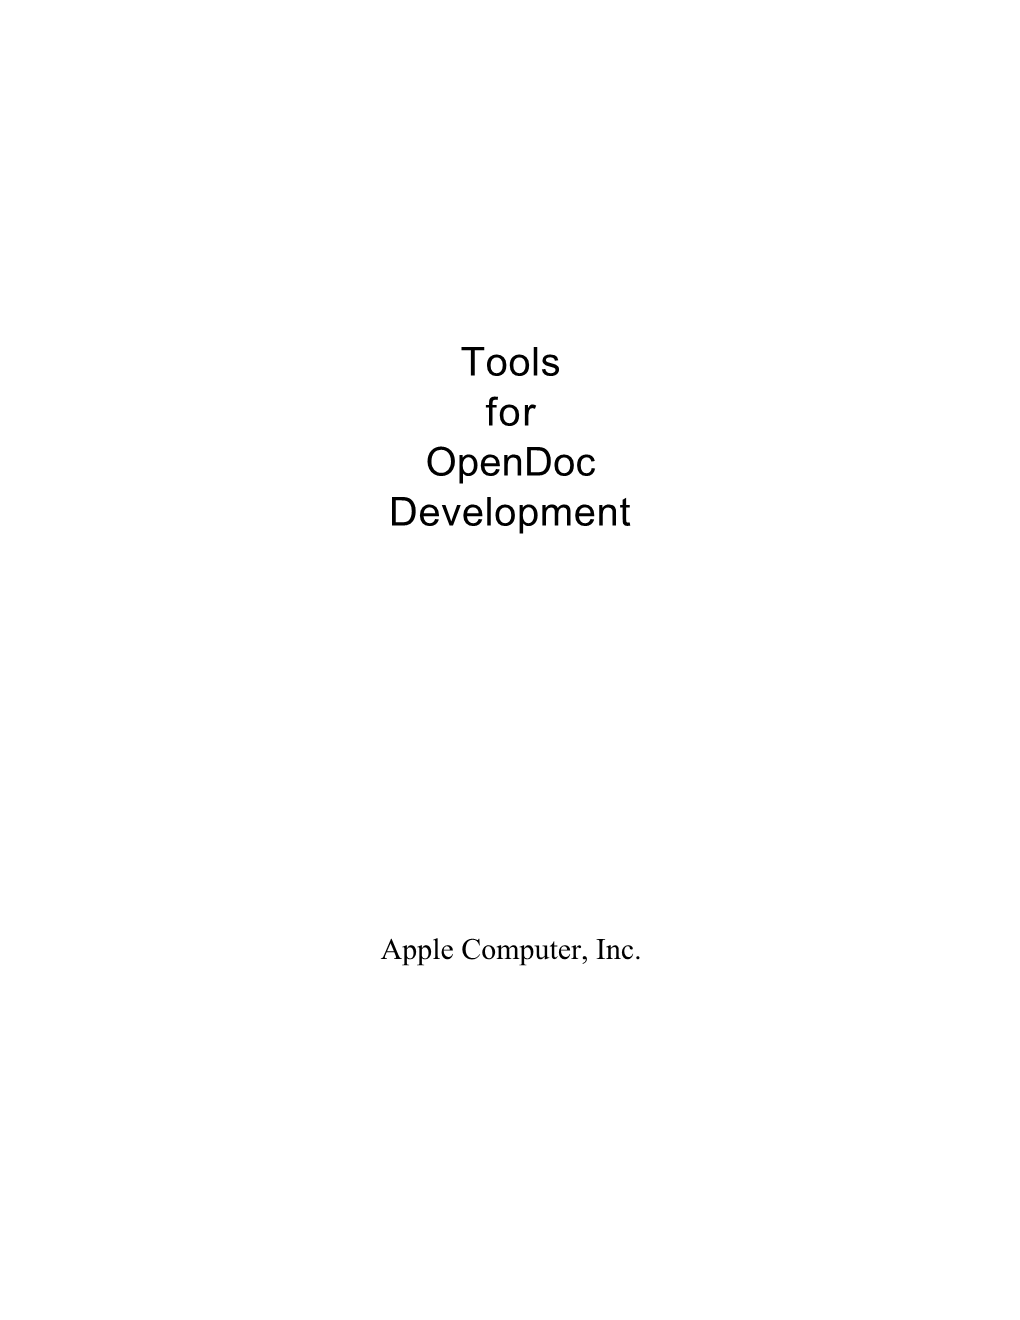 Tools for Opendoc Development